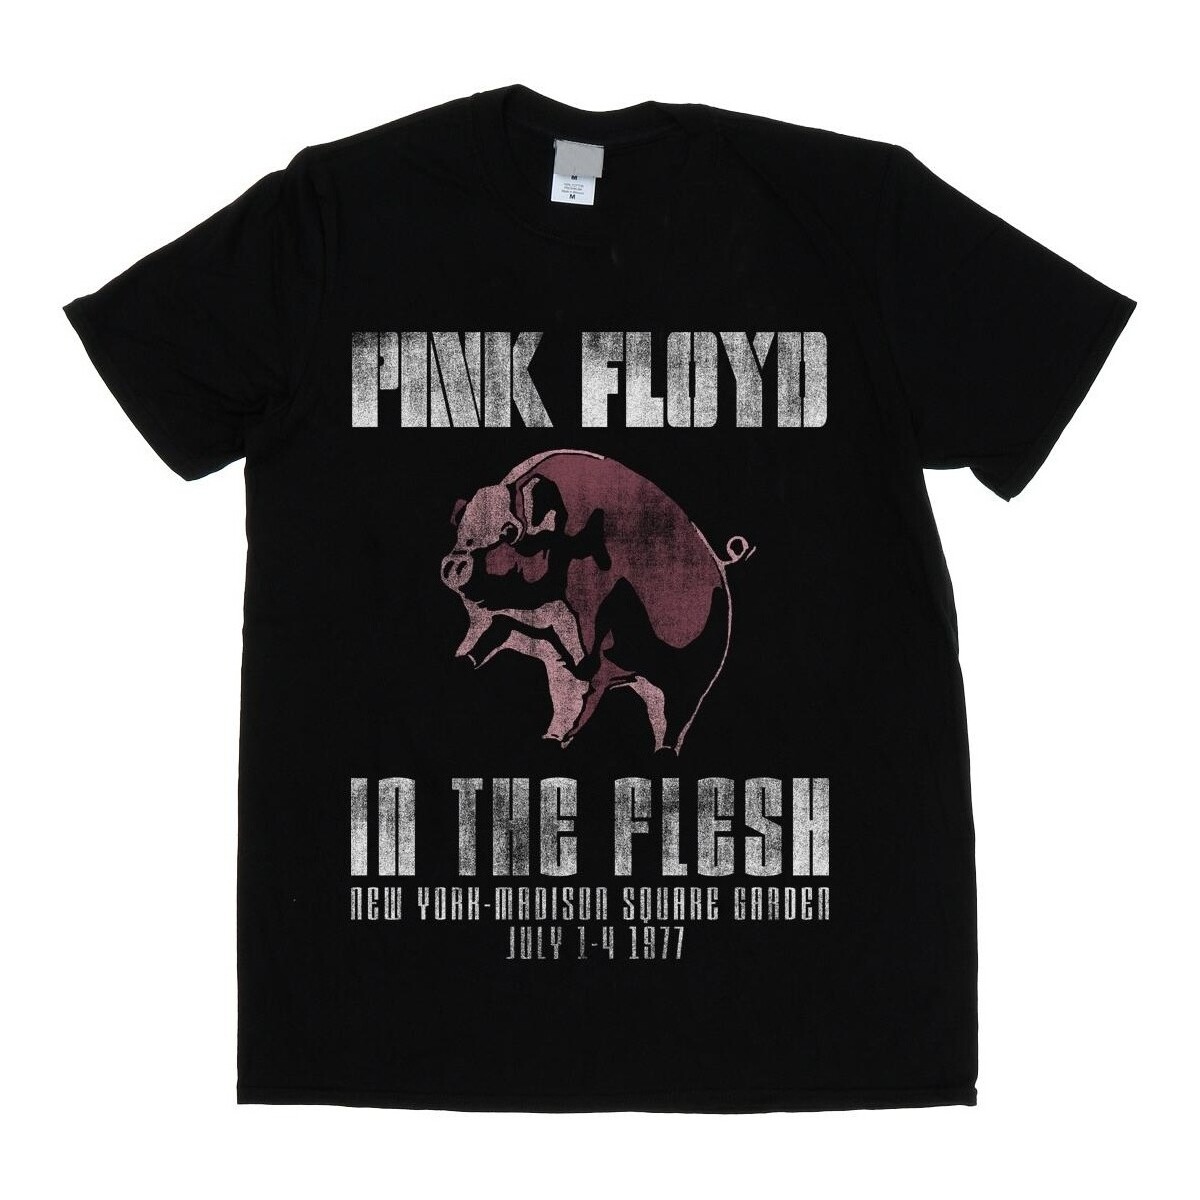 Vêtements Homme T-shirts manches longues Pink Floyd In The Flesh Noir